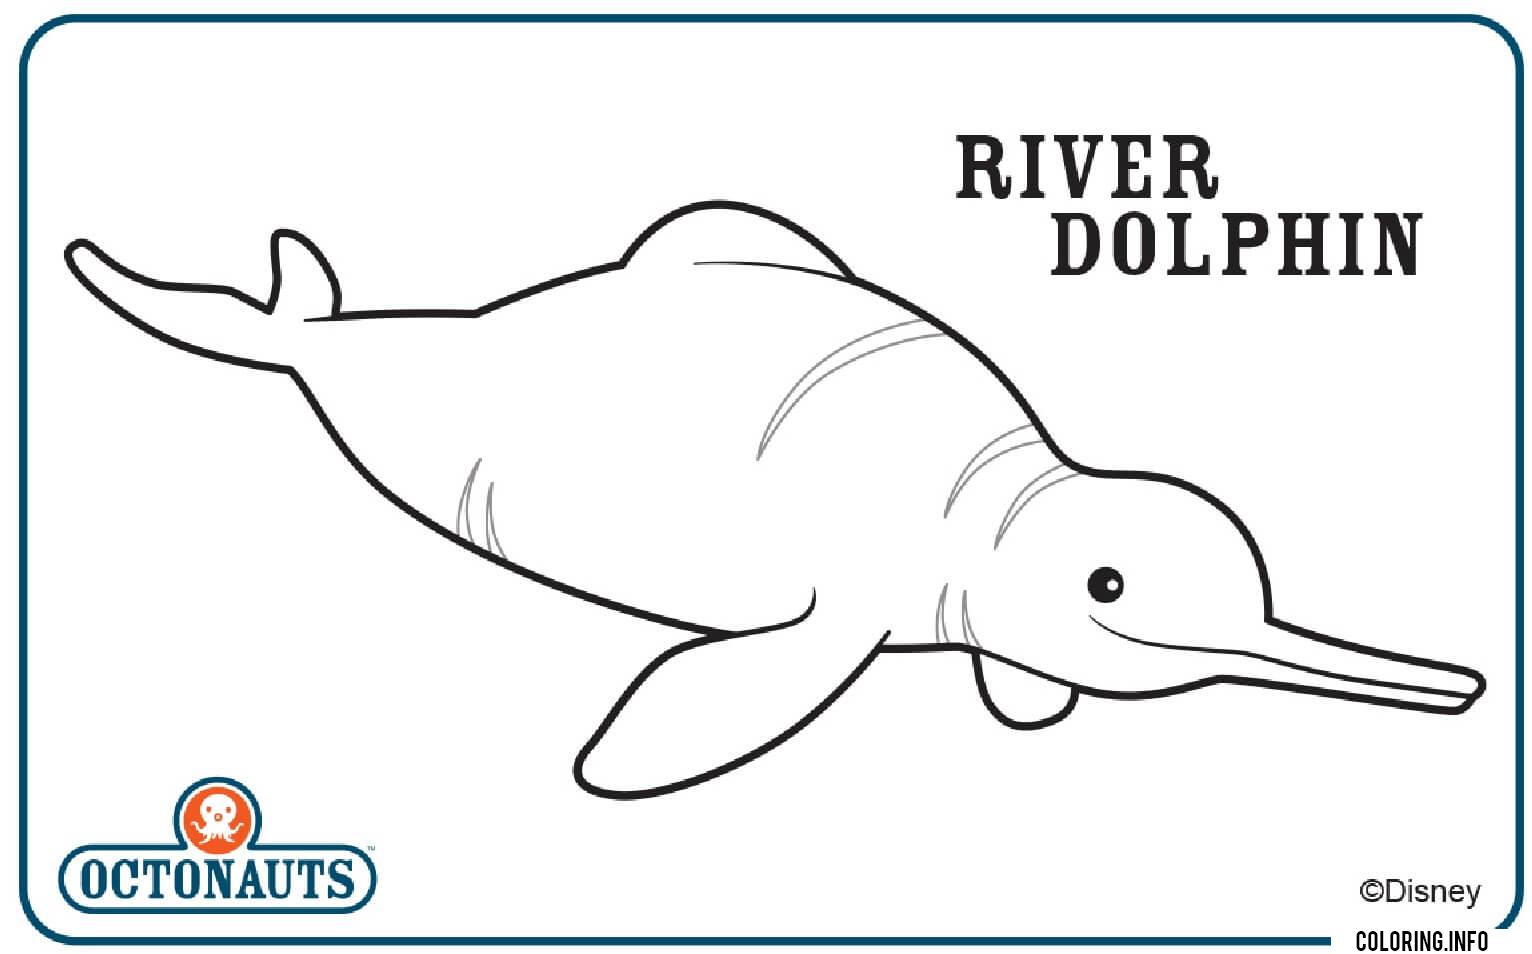 River Dolphin Octonaut Creature coloring